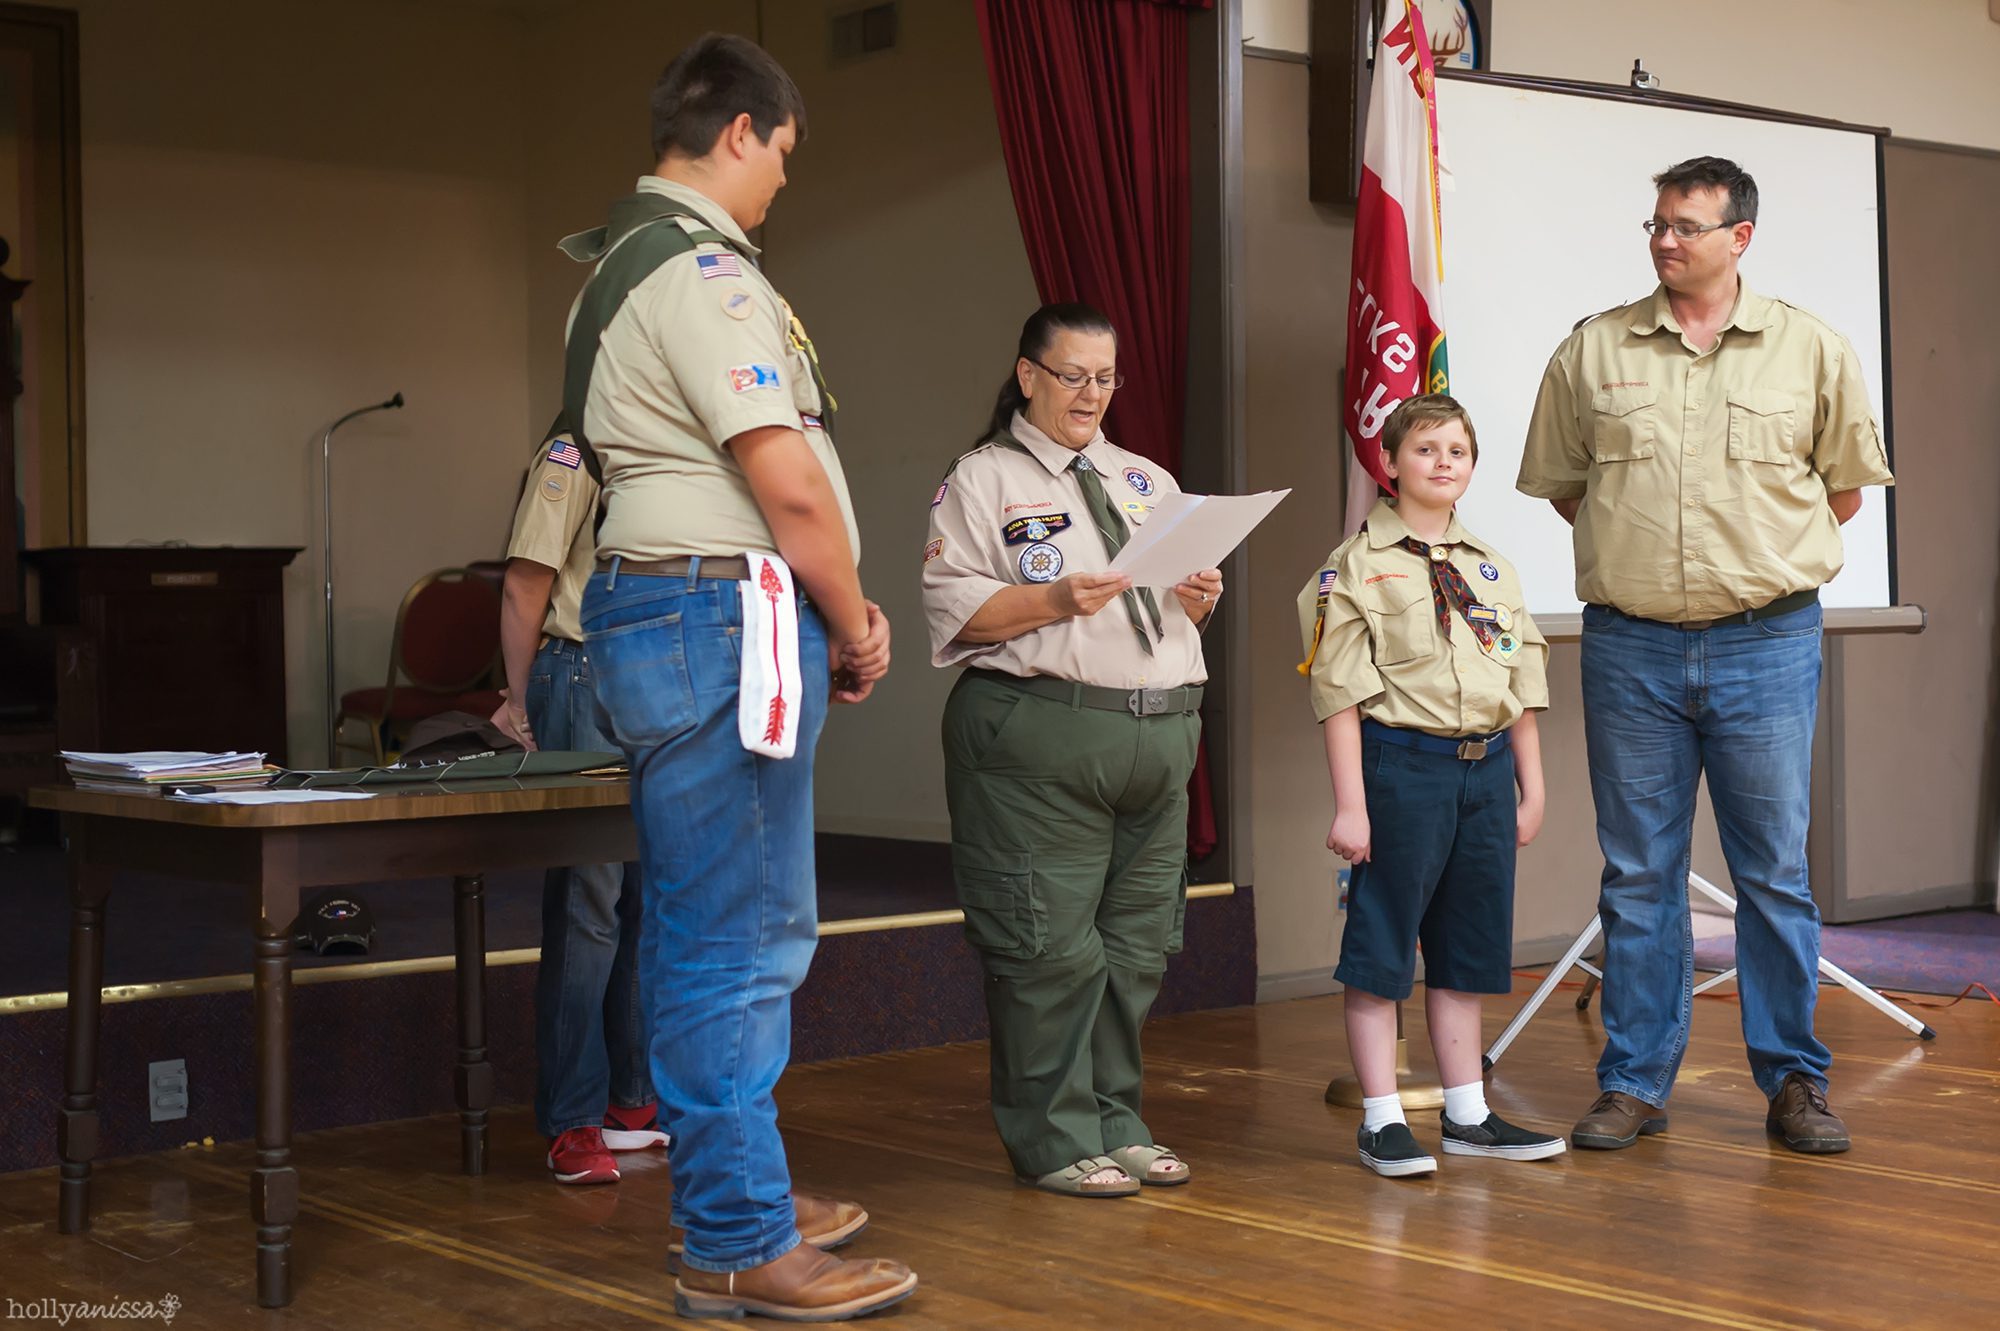 New Braunfels Boy Scout lifestyle photographer